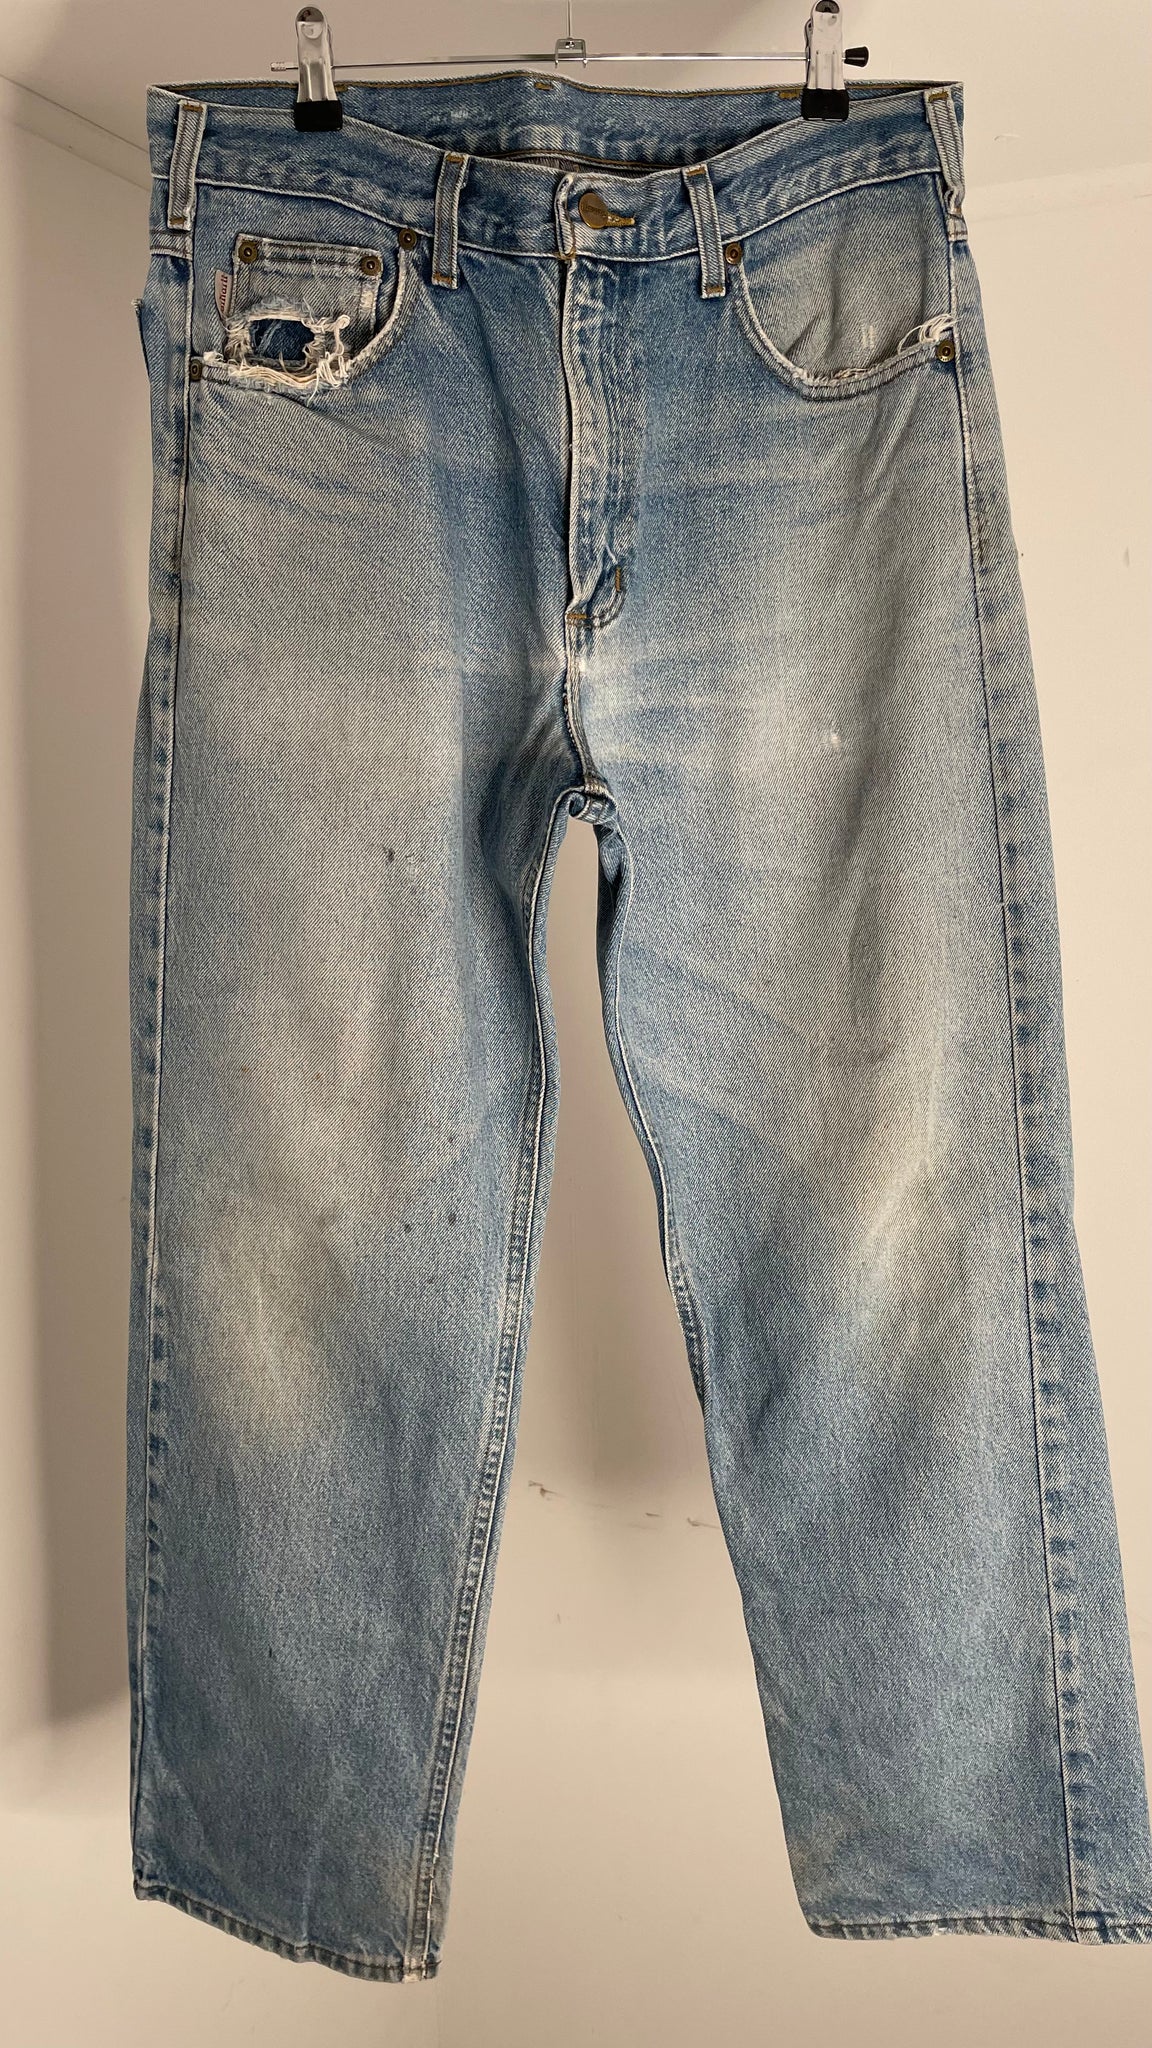 Vintage Carhartt Thrashed Jeans 34x30